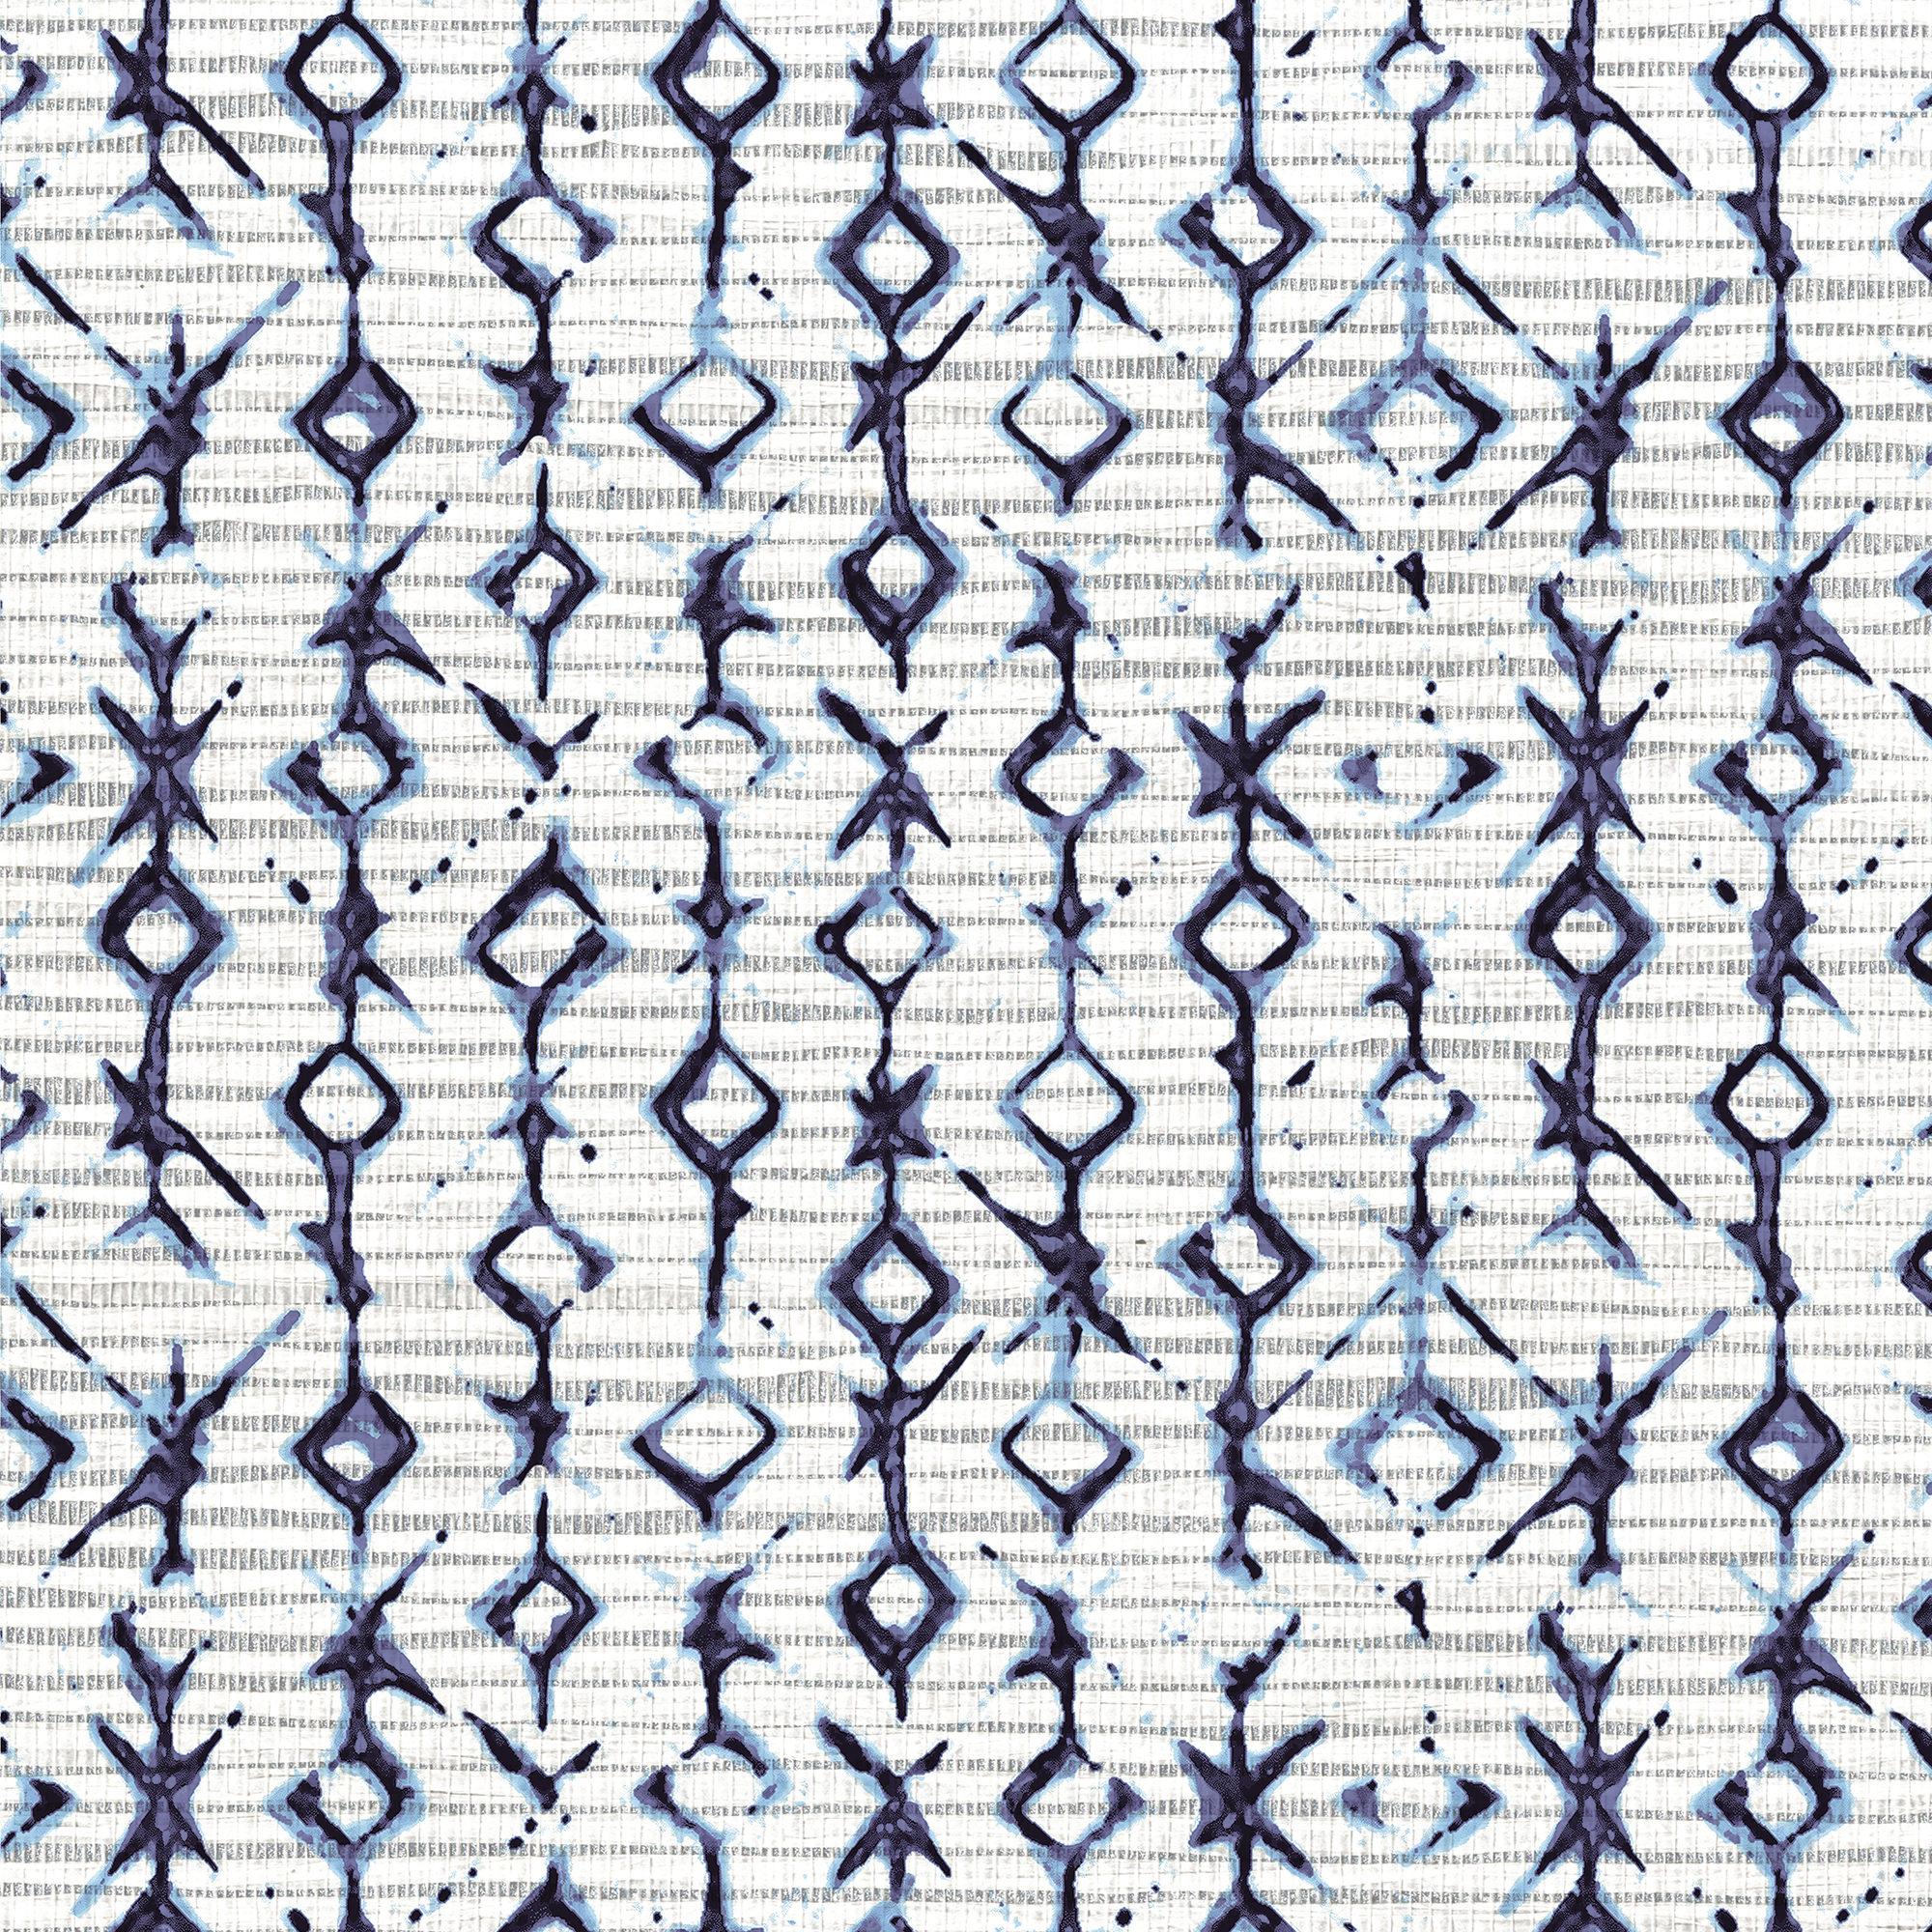 Korean Natural Patterned Paperweaves Wallcovering / Wallpaper, 11 Yard Roll